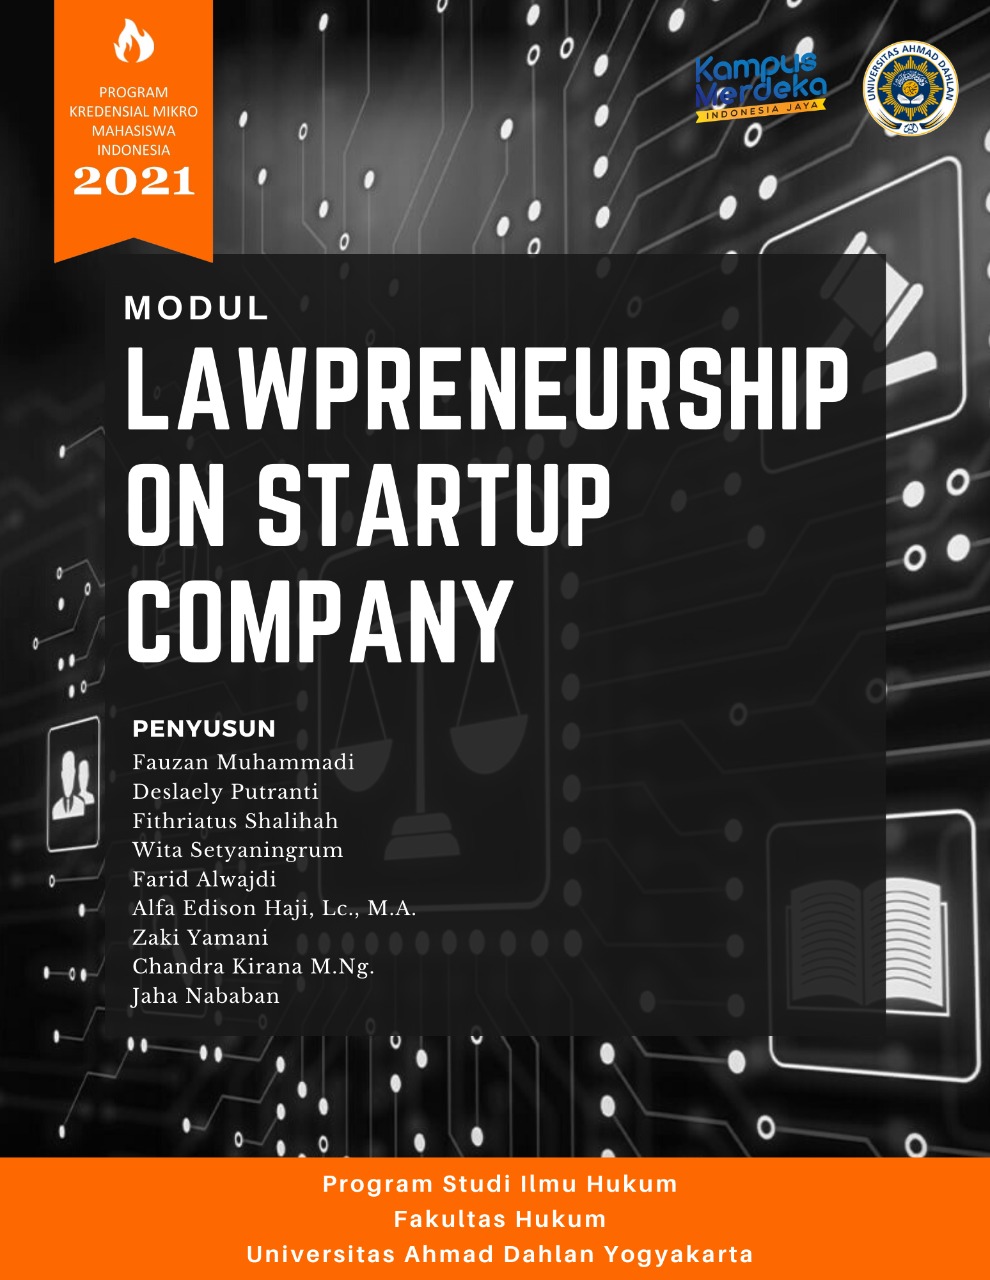 Lawpreneurship on Startup Company